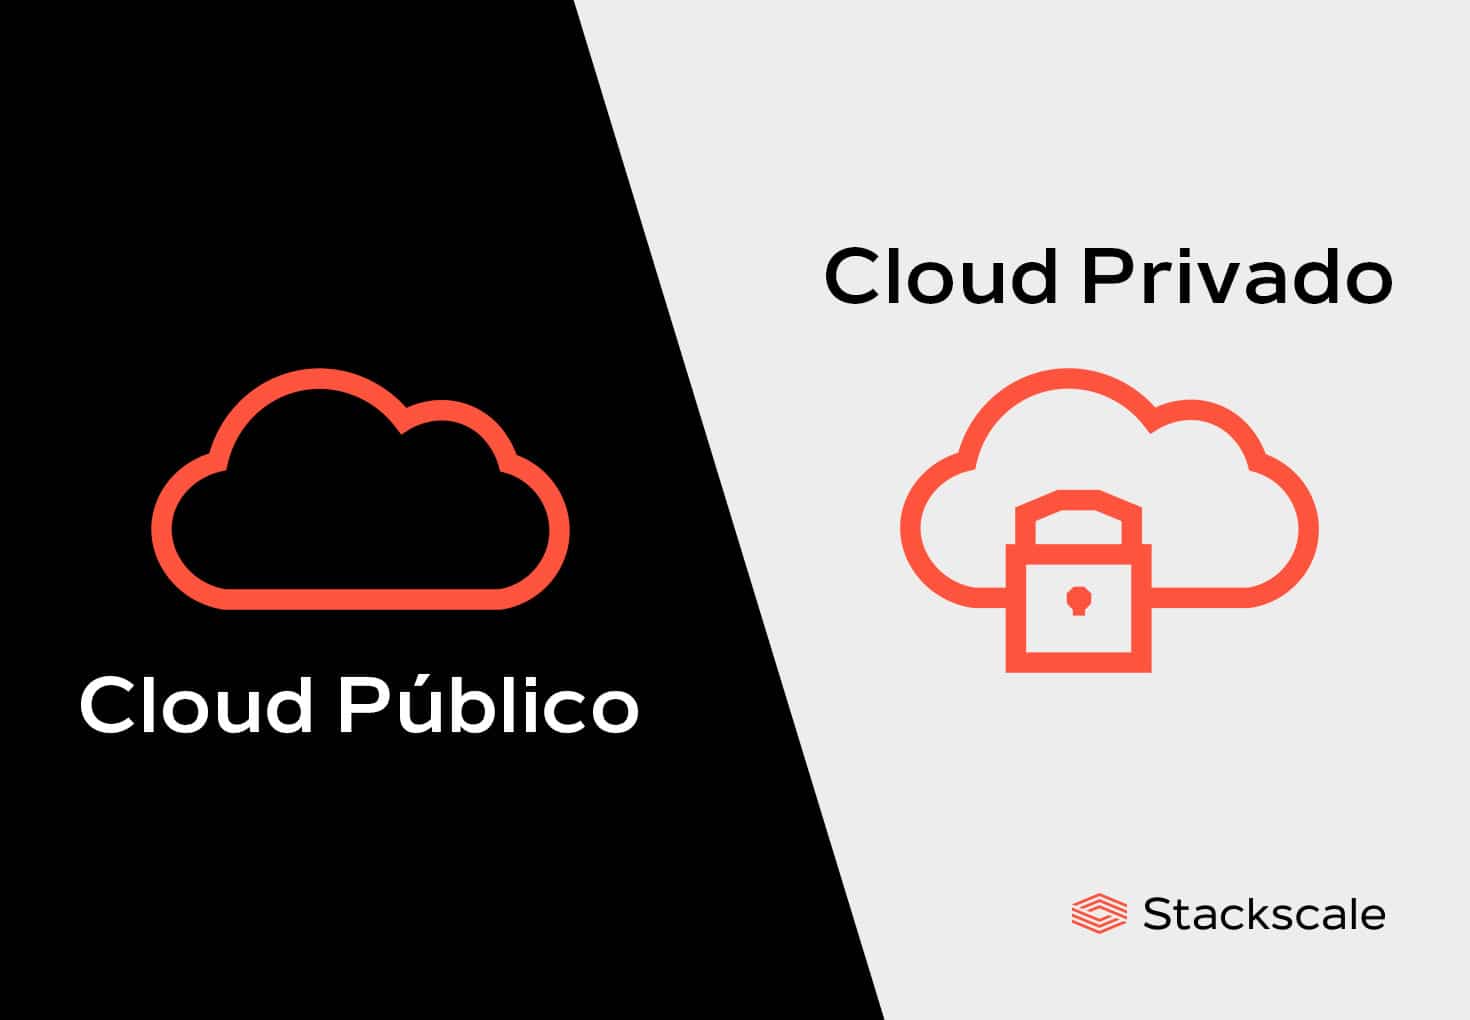 Nube pública vs. nube privada de Stackscale